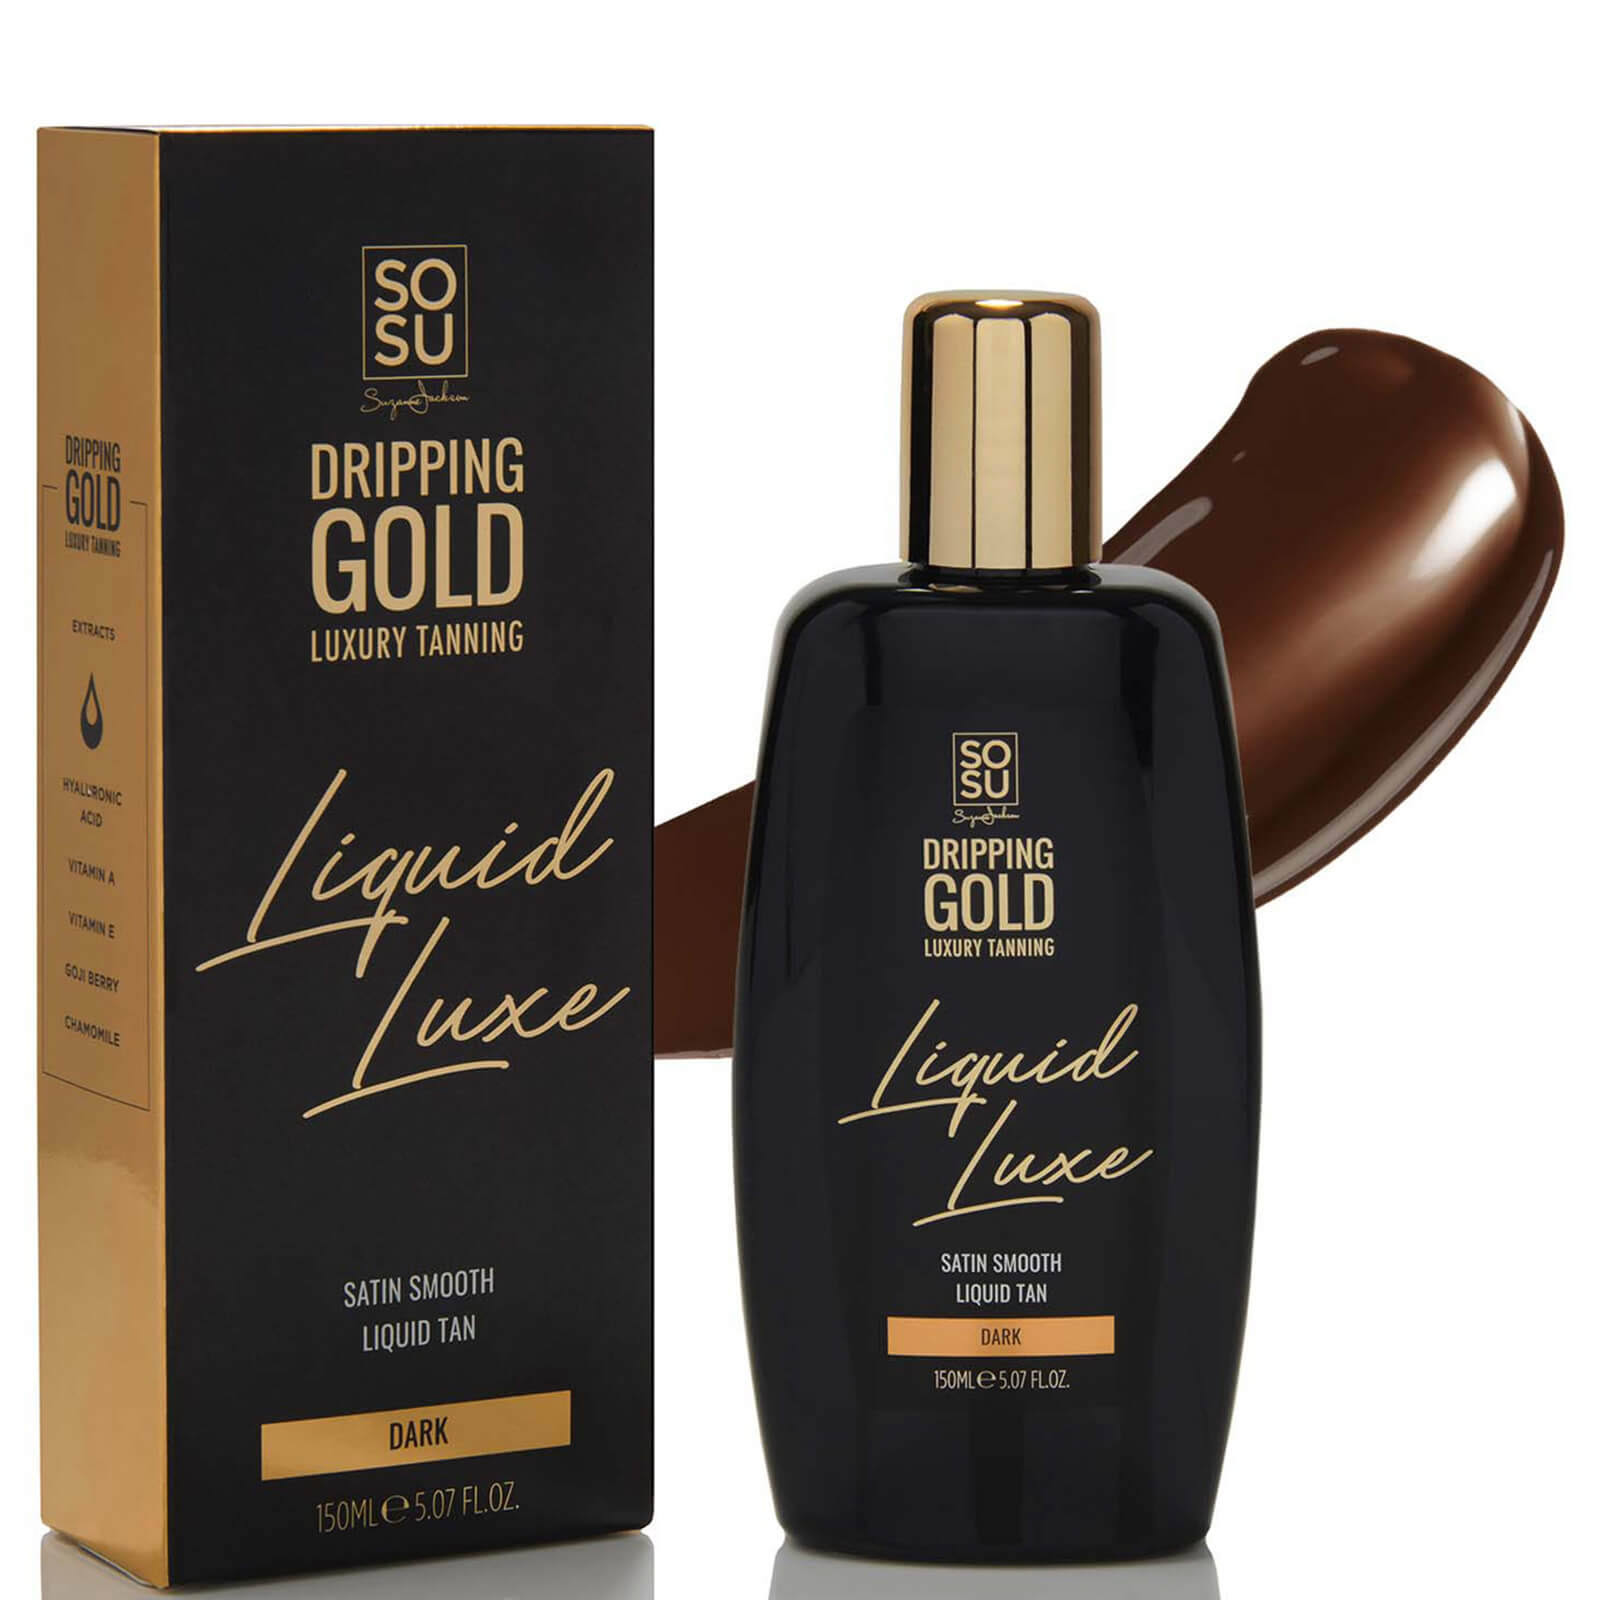 Dripping Gold Liquid Luxe Liquid Tan - Dark